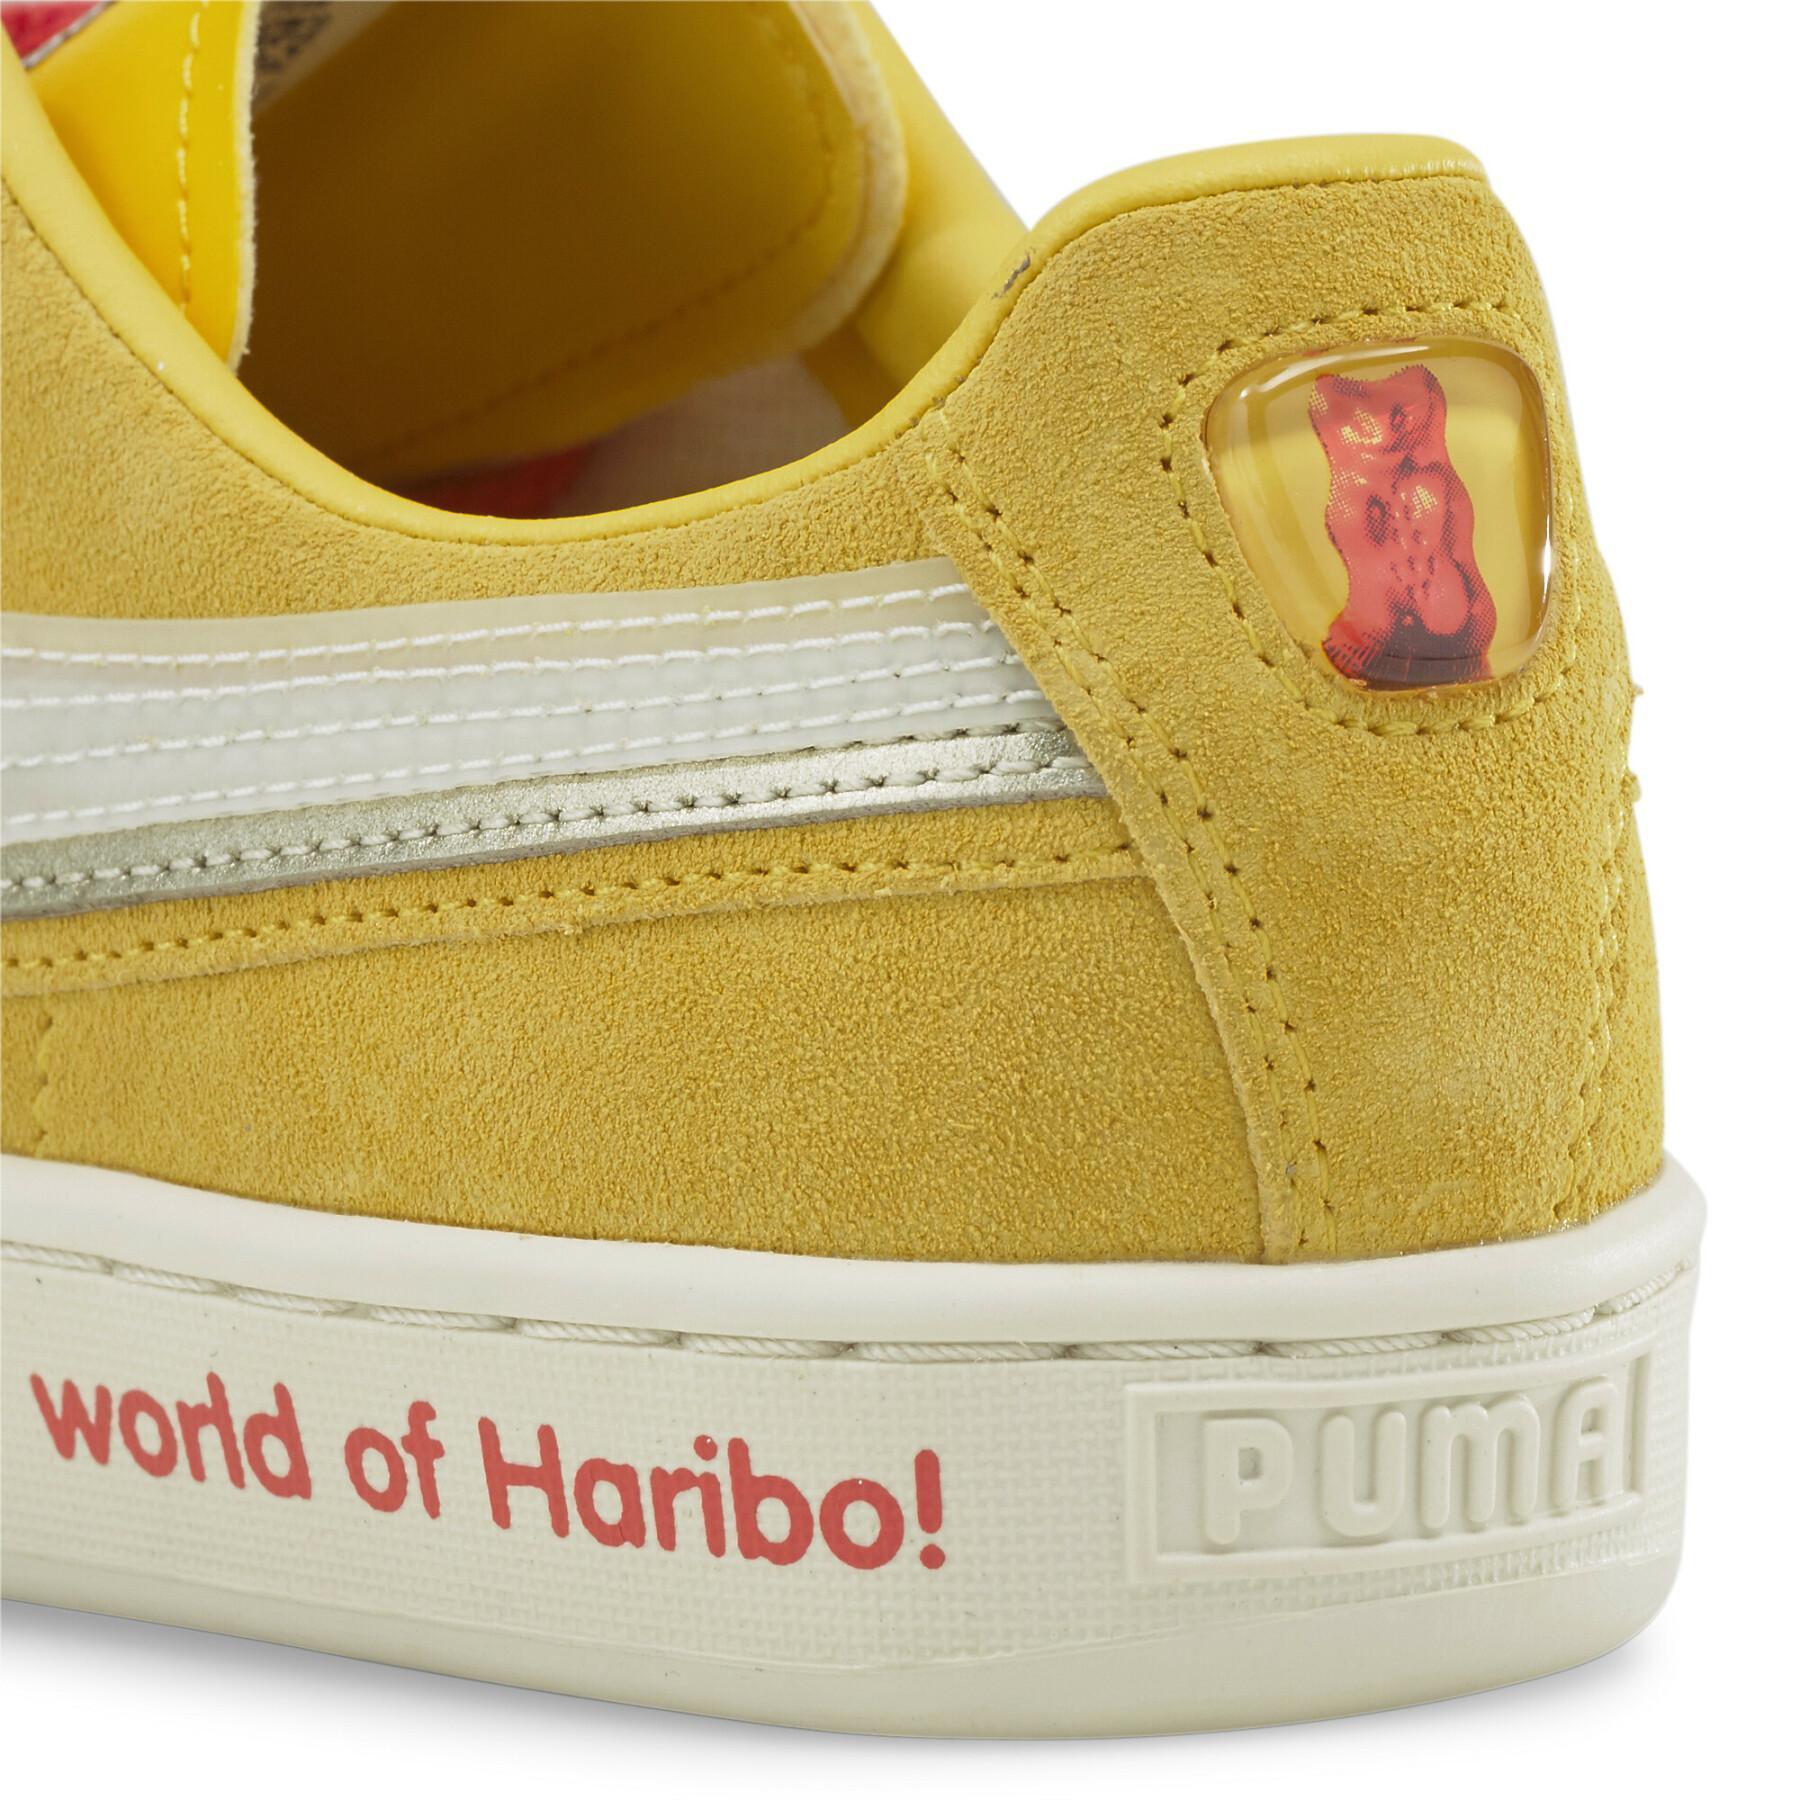 Children's sneakers Puma Suede Triplex Haribo